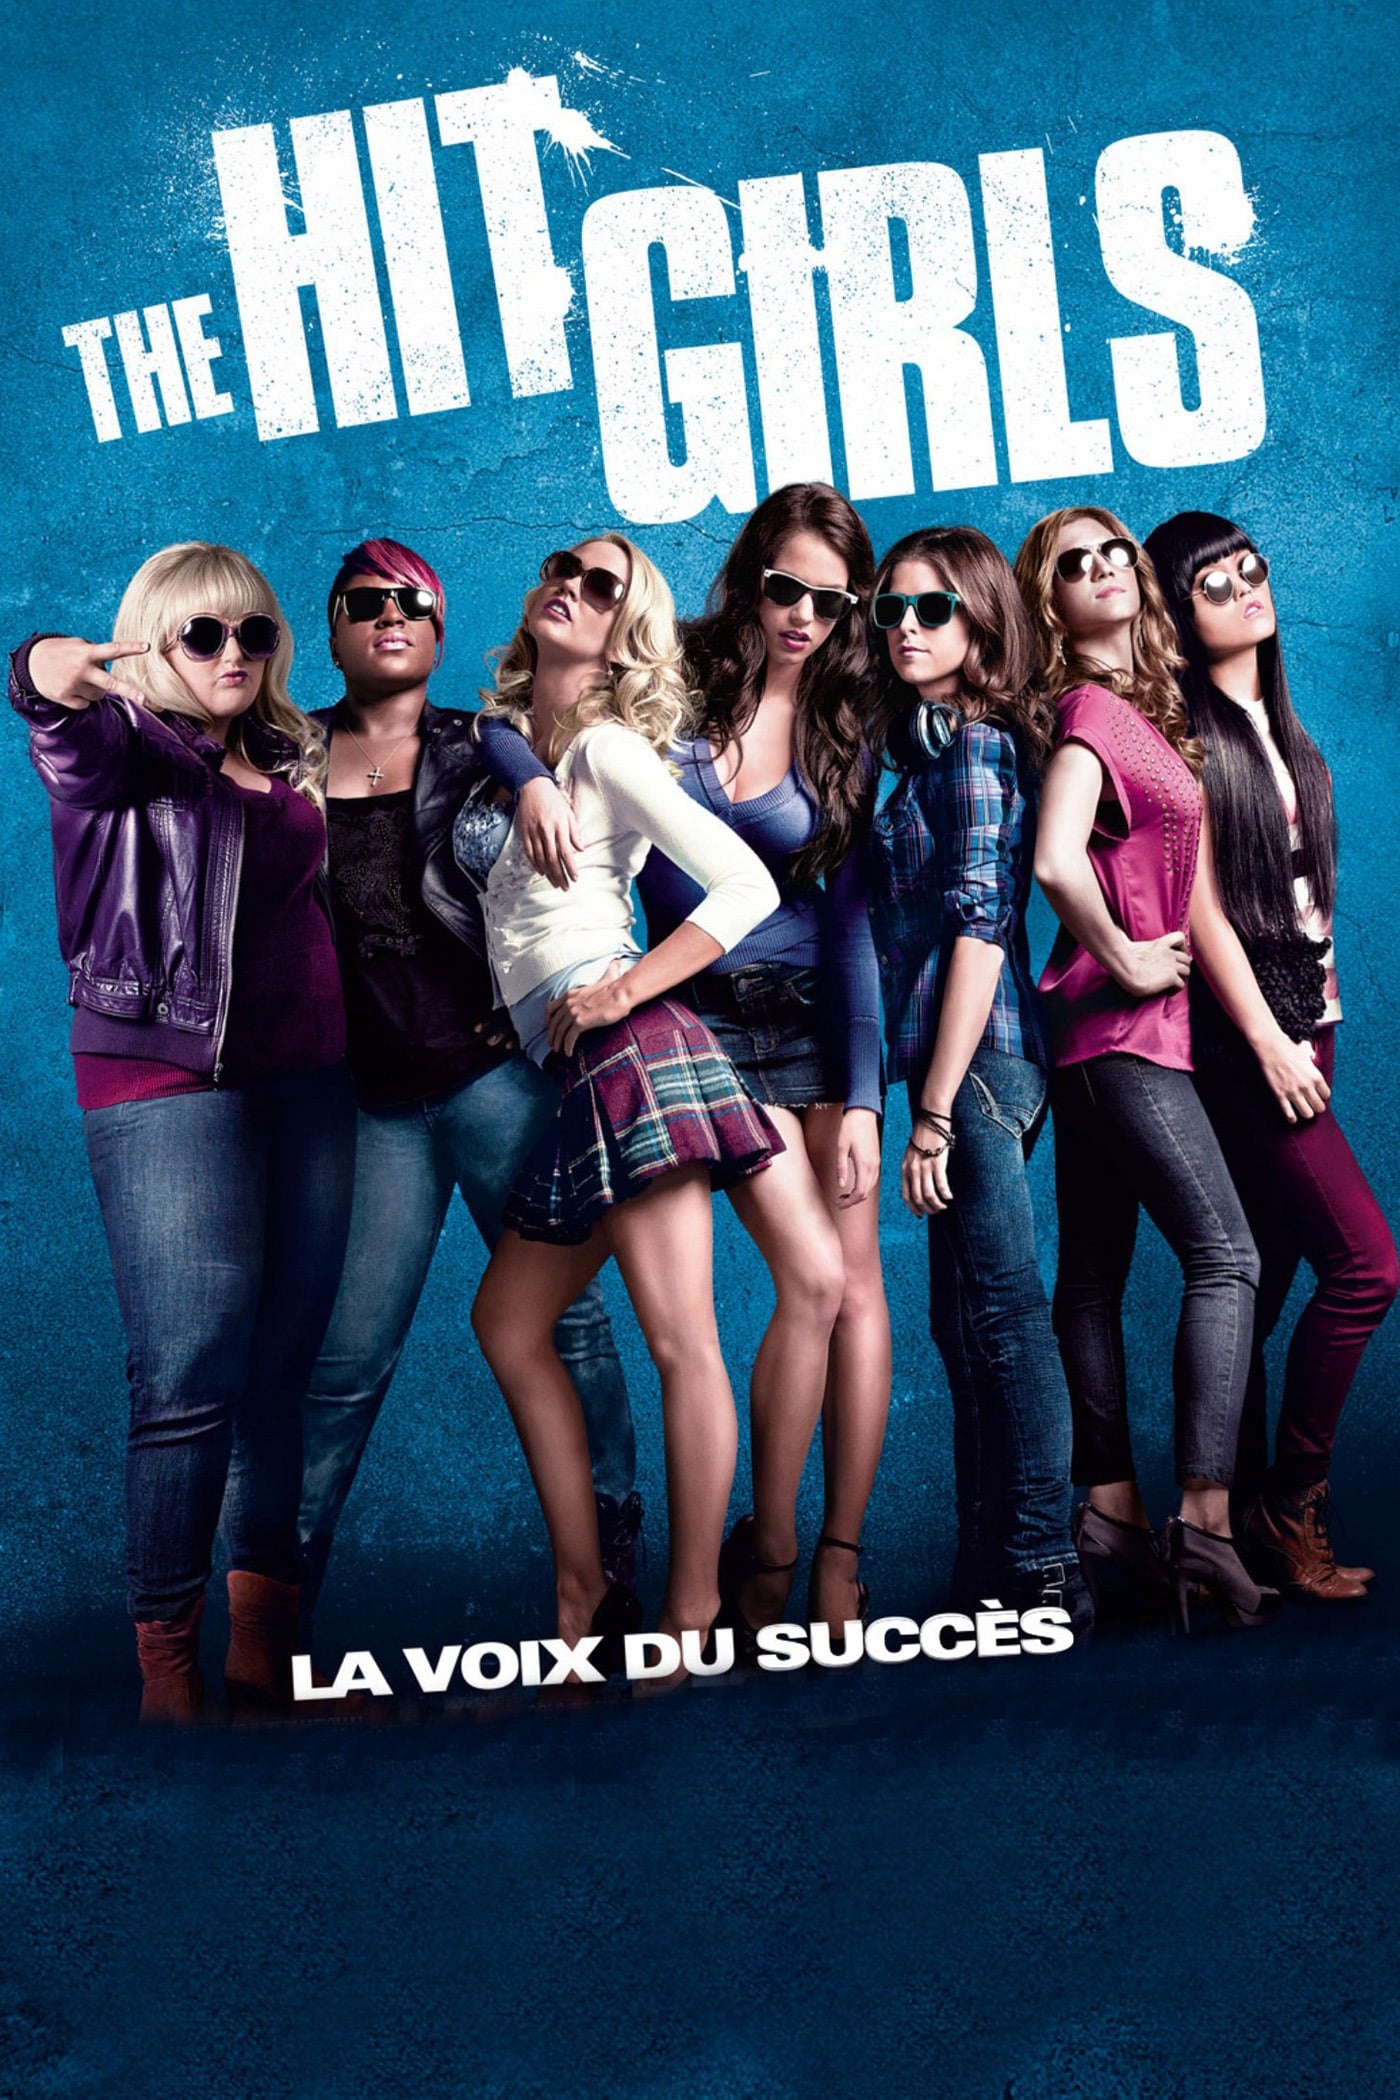 Affiche du film "The Hit Girls"